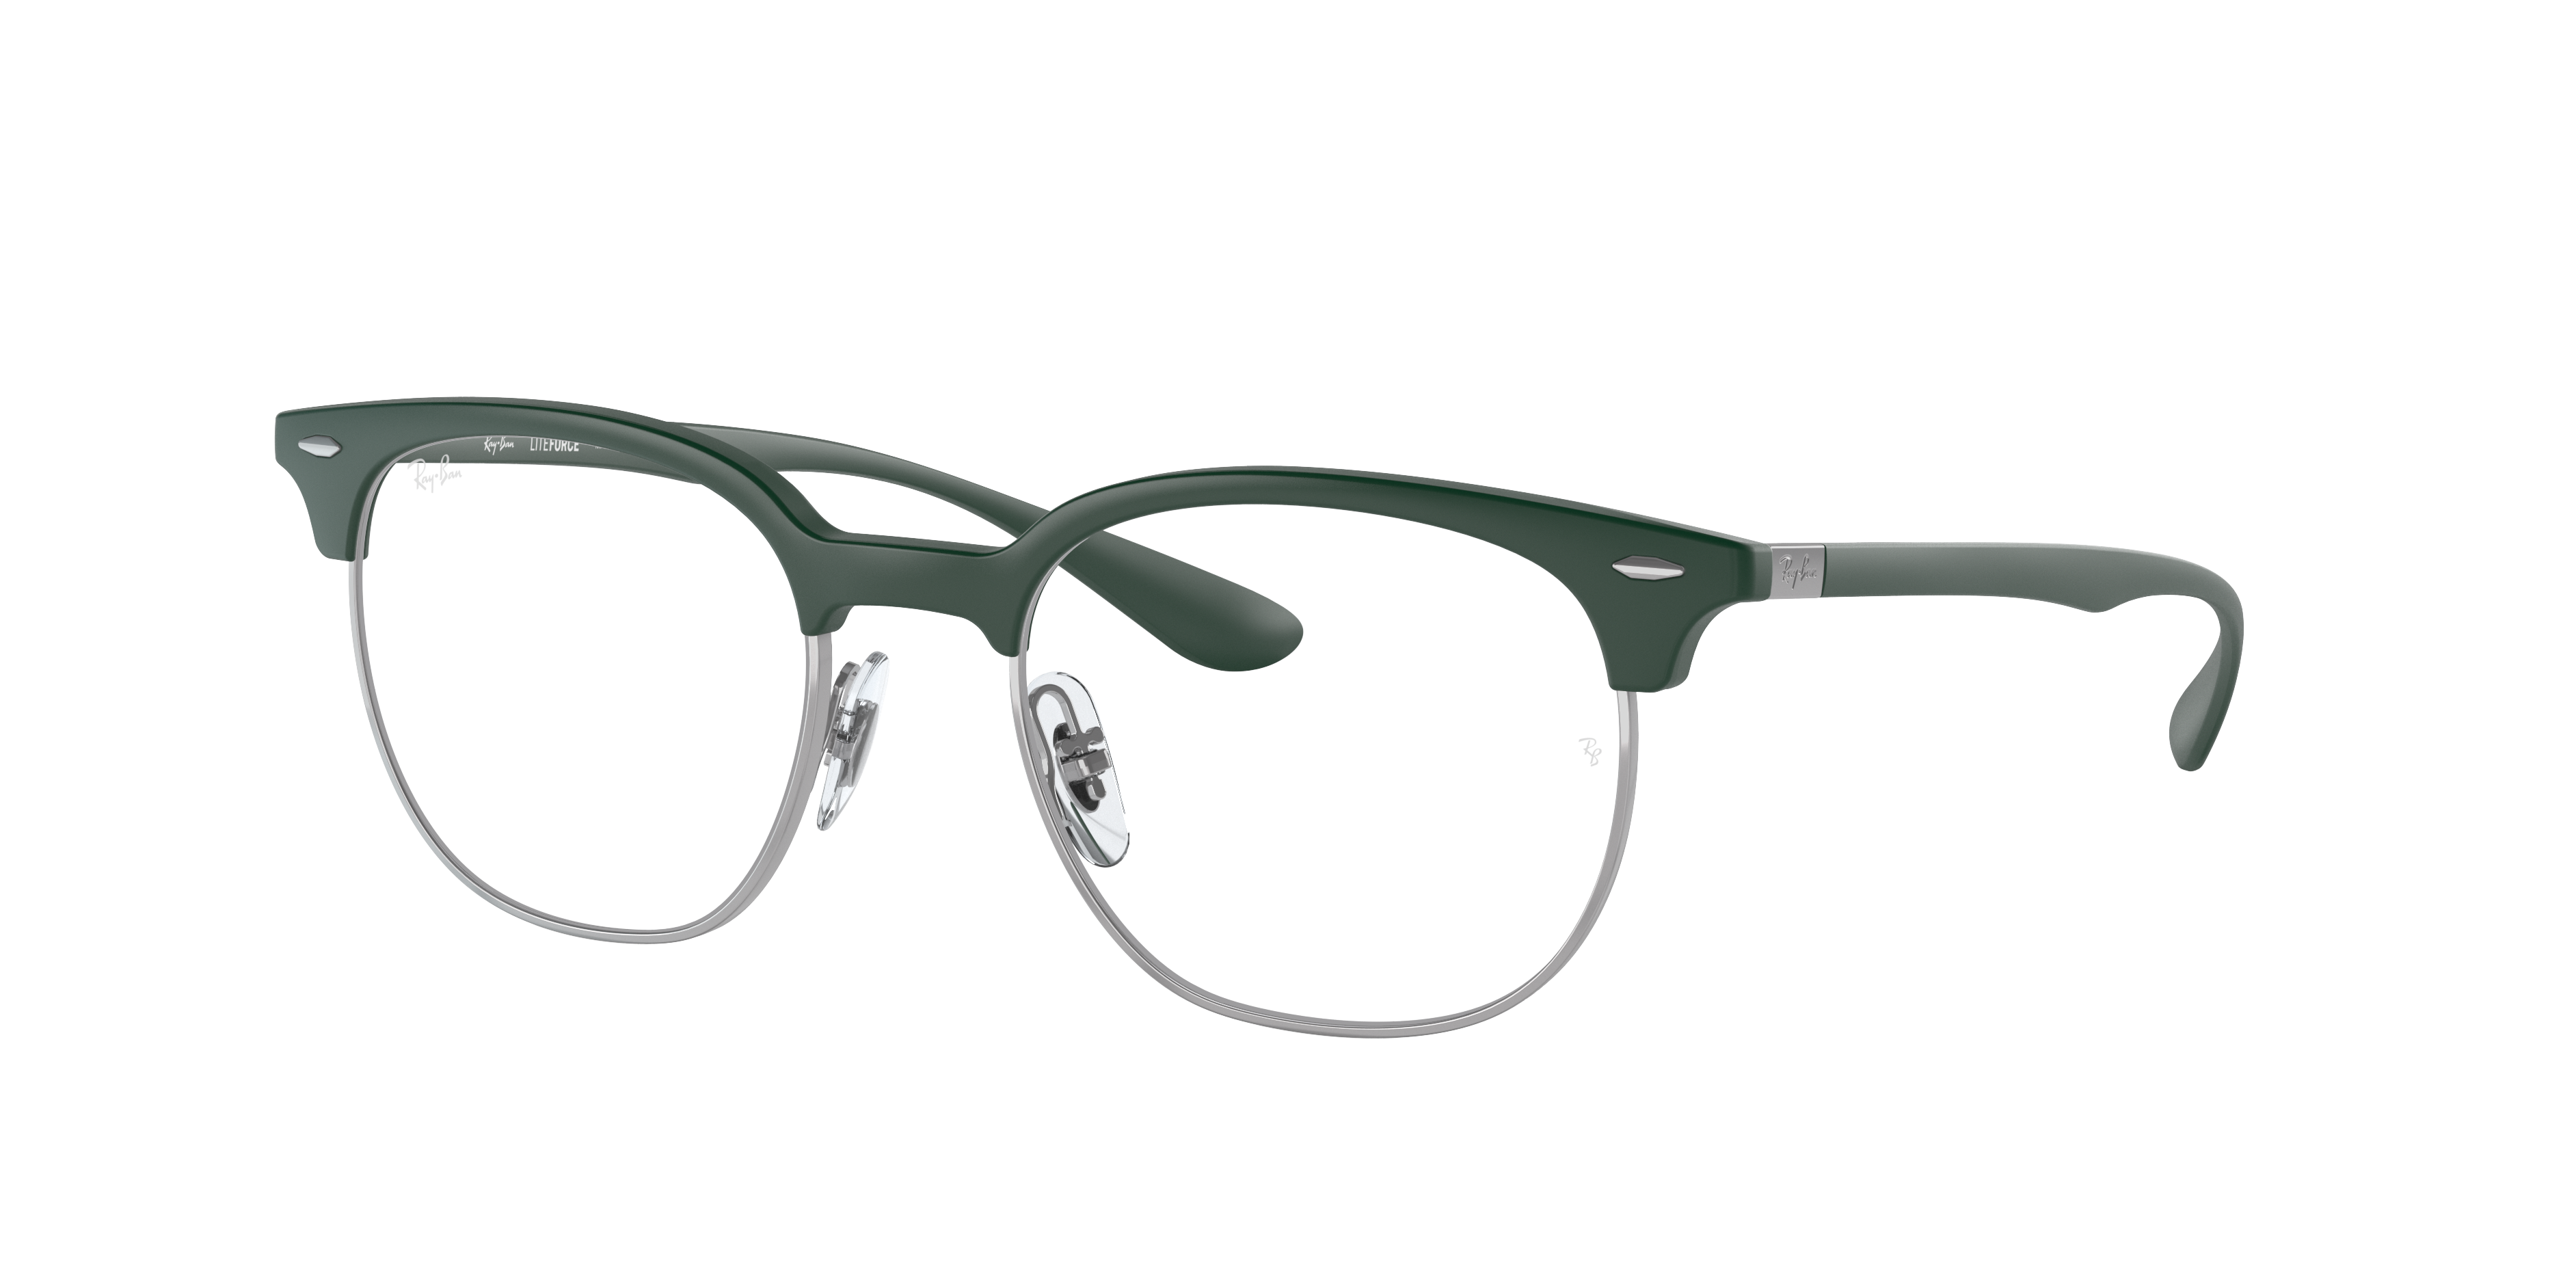 Rb7186 Optics Eyeglasses with Green Frame | Ray-Ban®